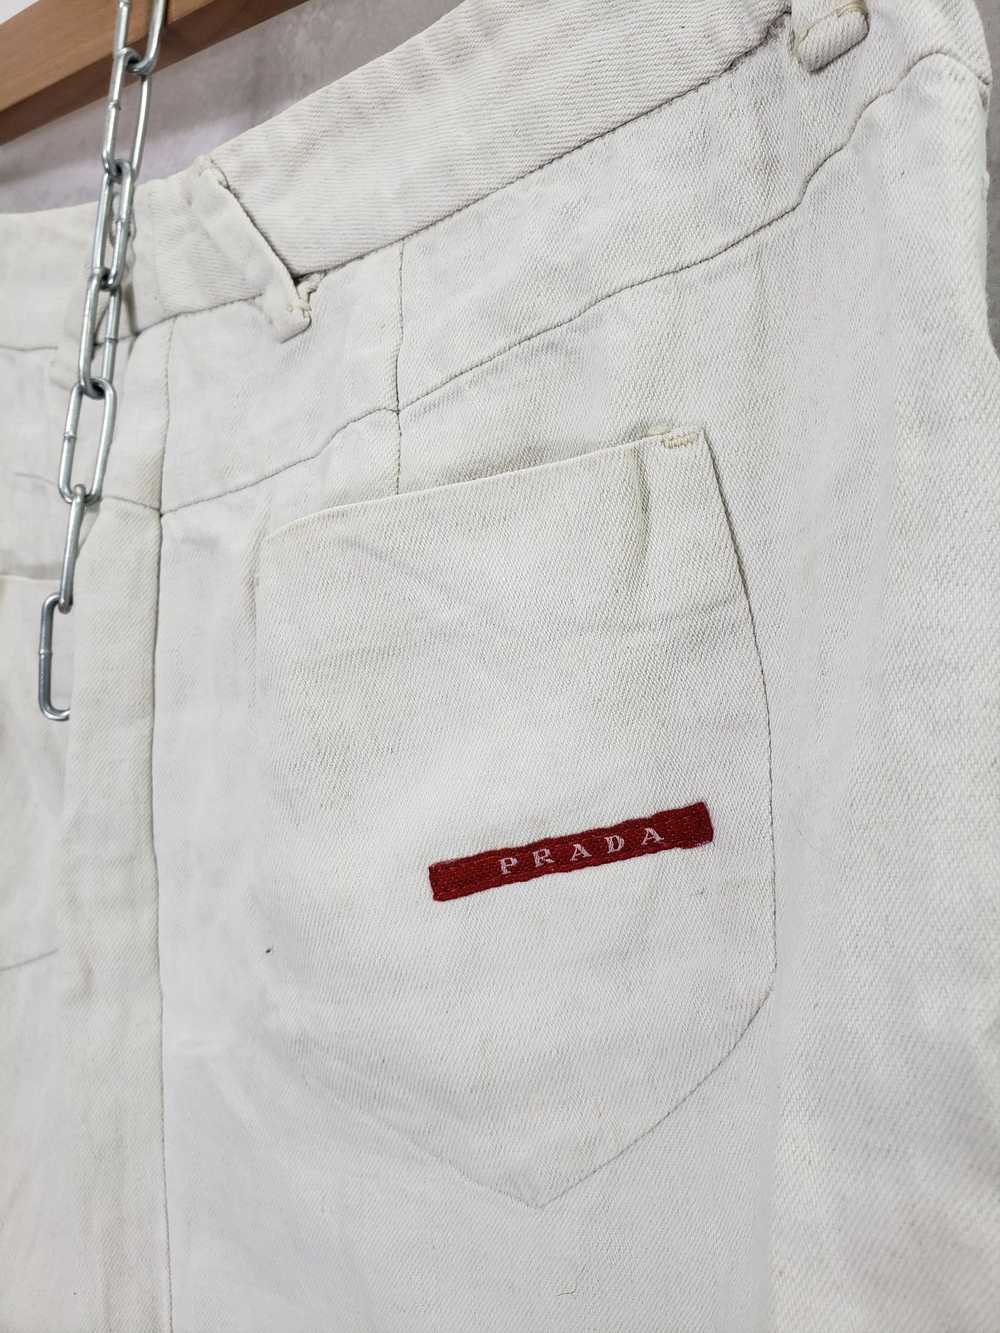 Prada × Vintage Prada jeans skirt red tab - image 6